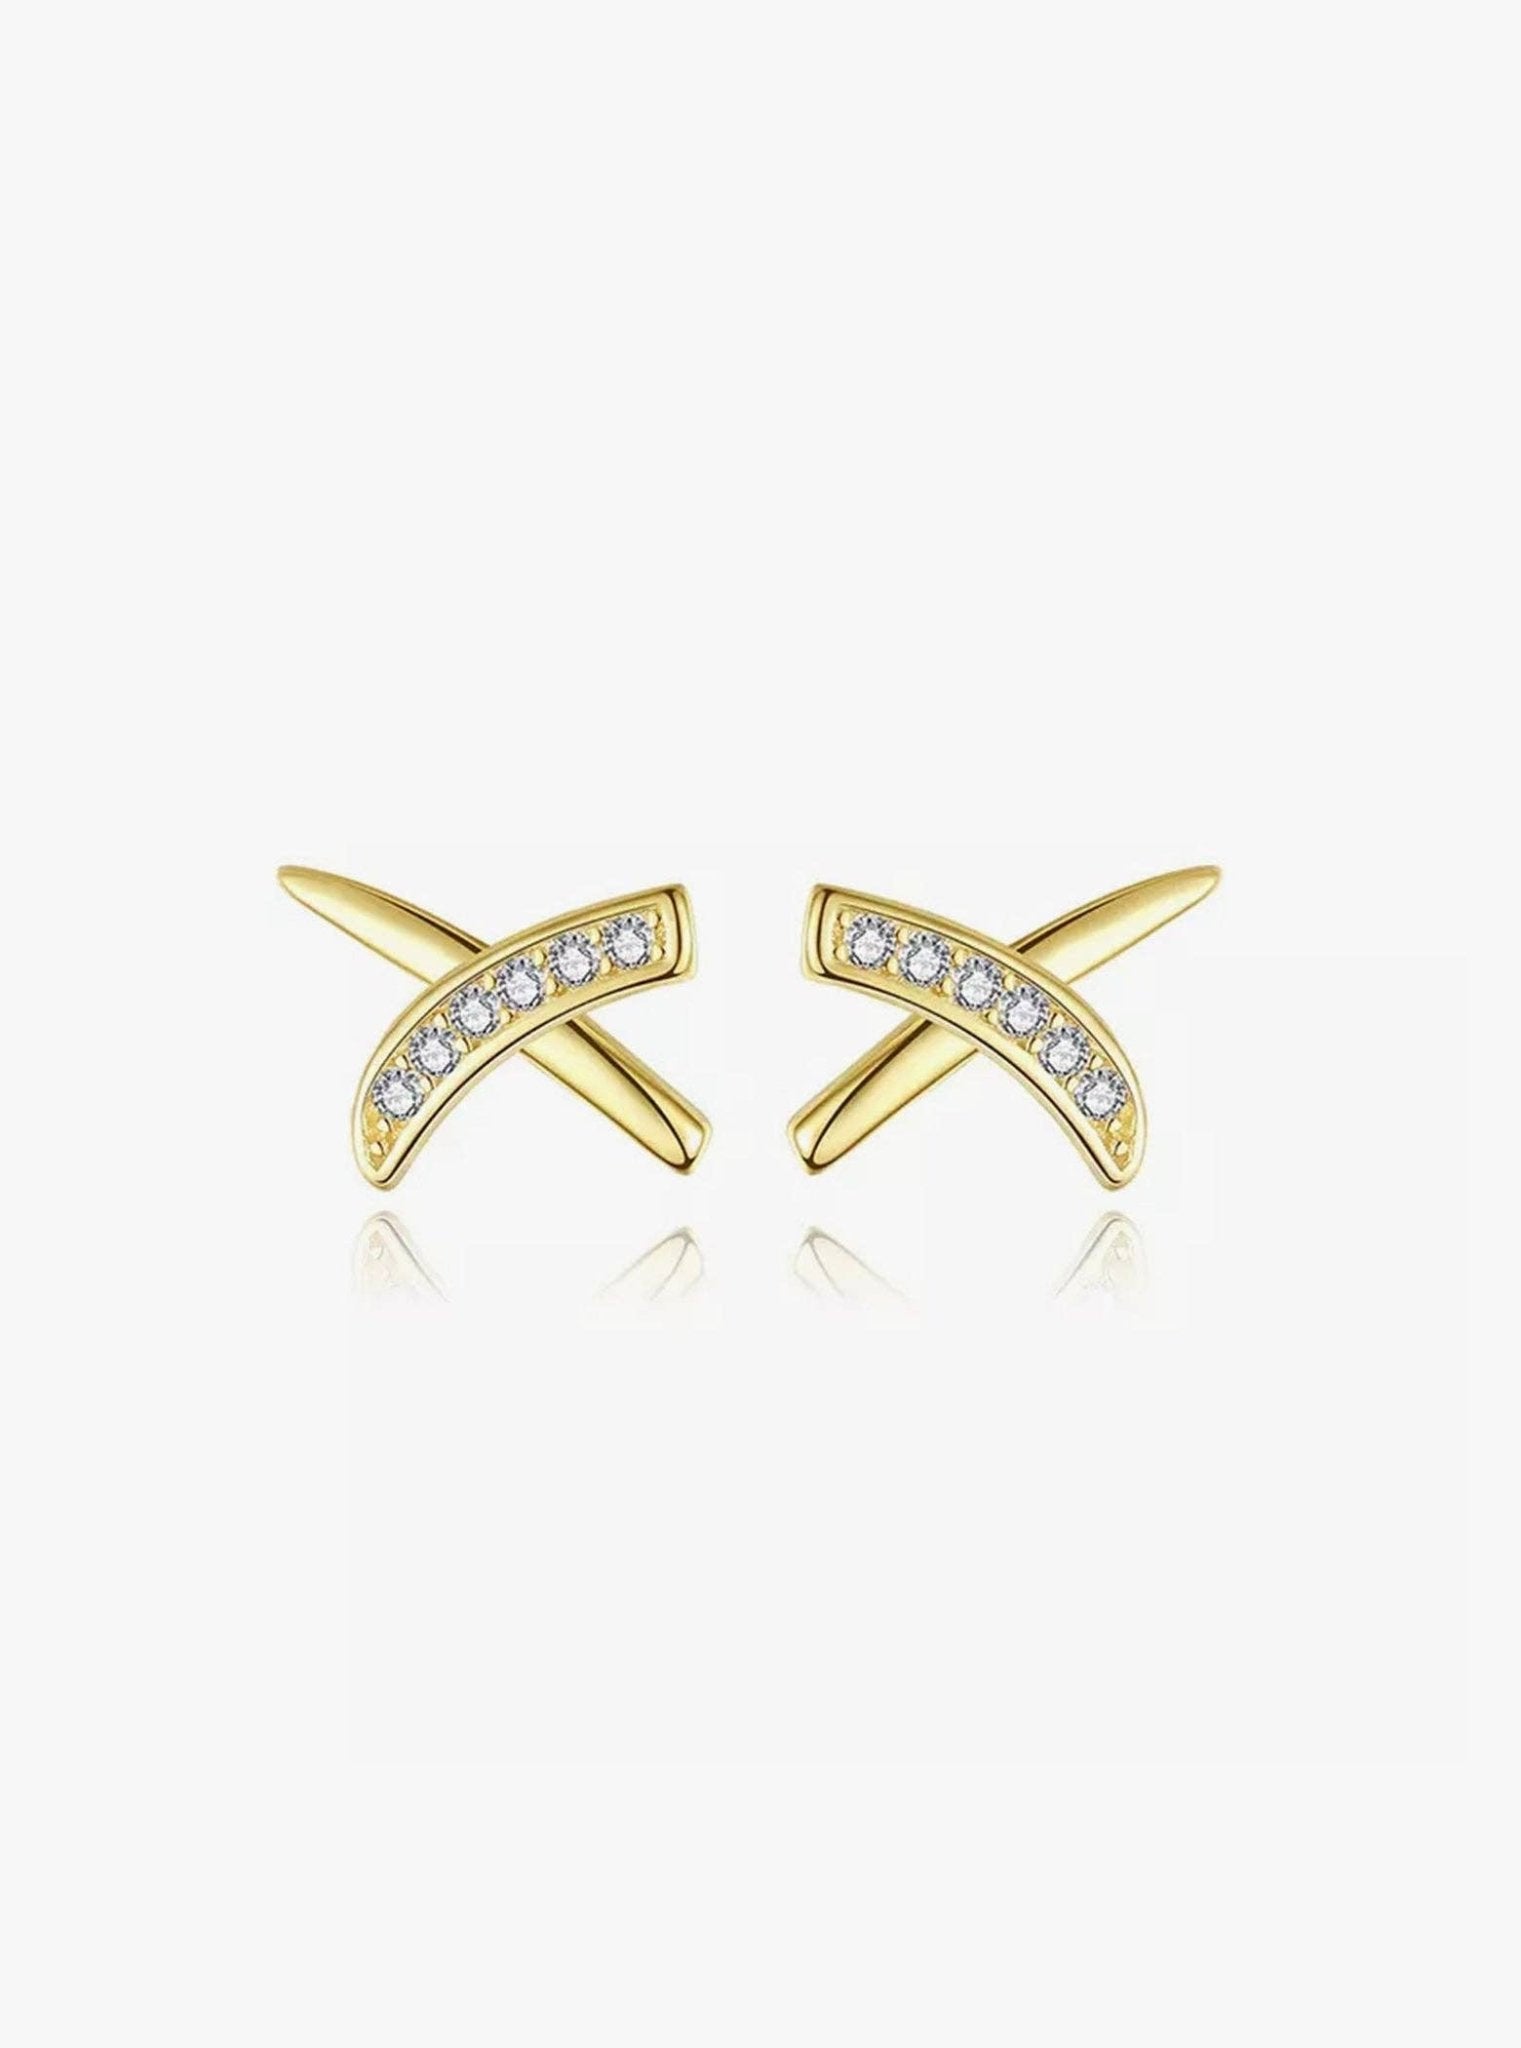 CZ X Earring, 925 Sterling Gold Vermiel Abigail Fox - Abigail Fox Designs